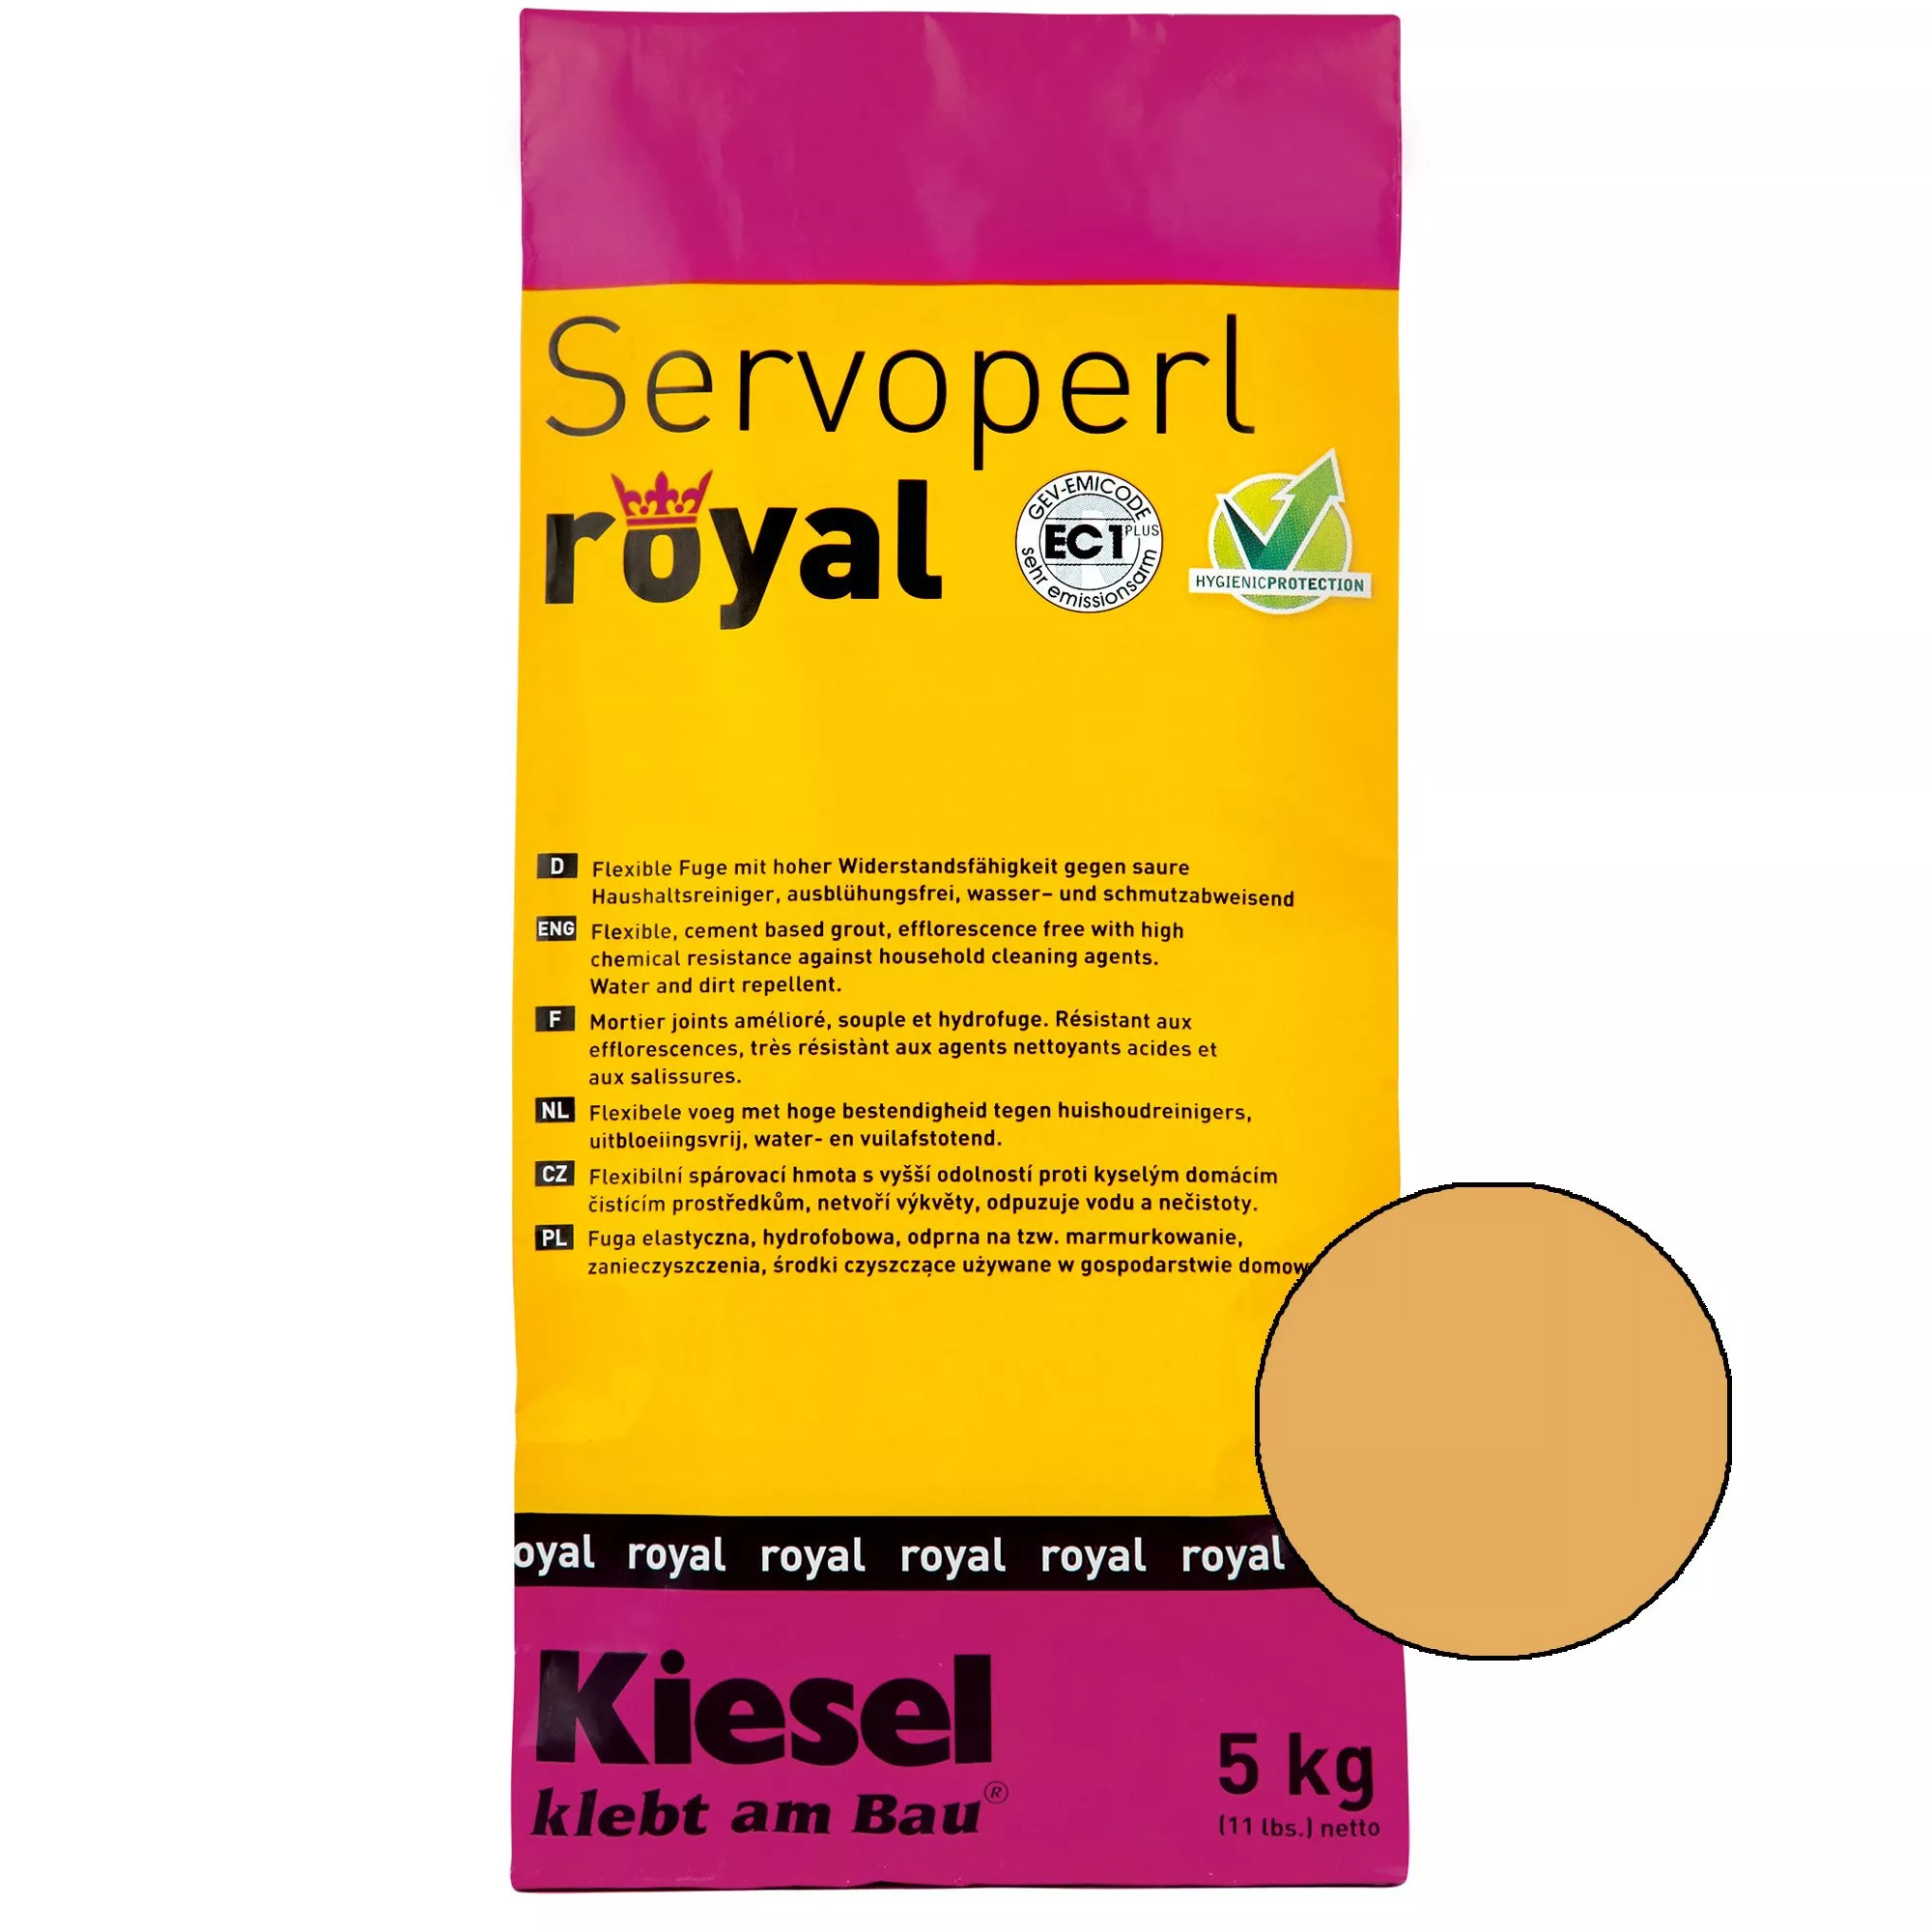 Kiesel Servoperl Royal - Flexibele, Water- En Vuilafstotende Voeg (5KG Sahara)